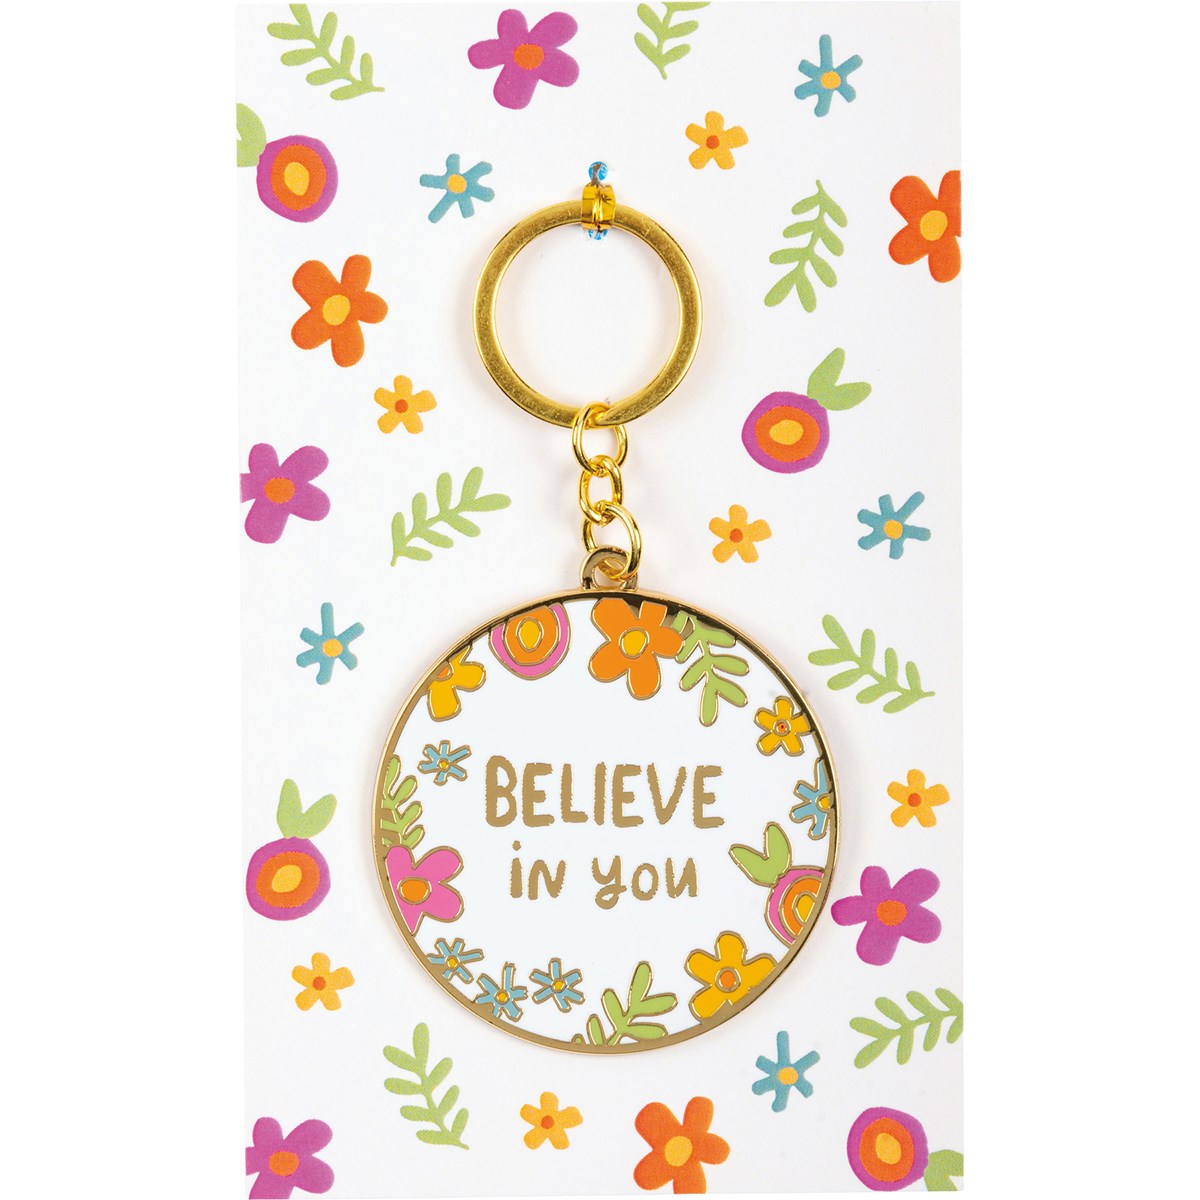 Keychain - Believe In You - 2" Diameter; Card: 3" x 5" - Metal, Enamel, Paper